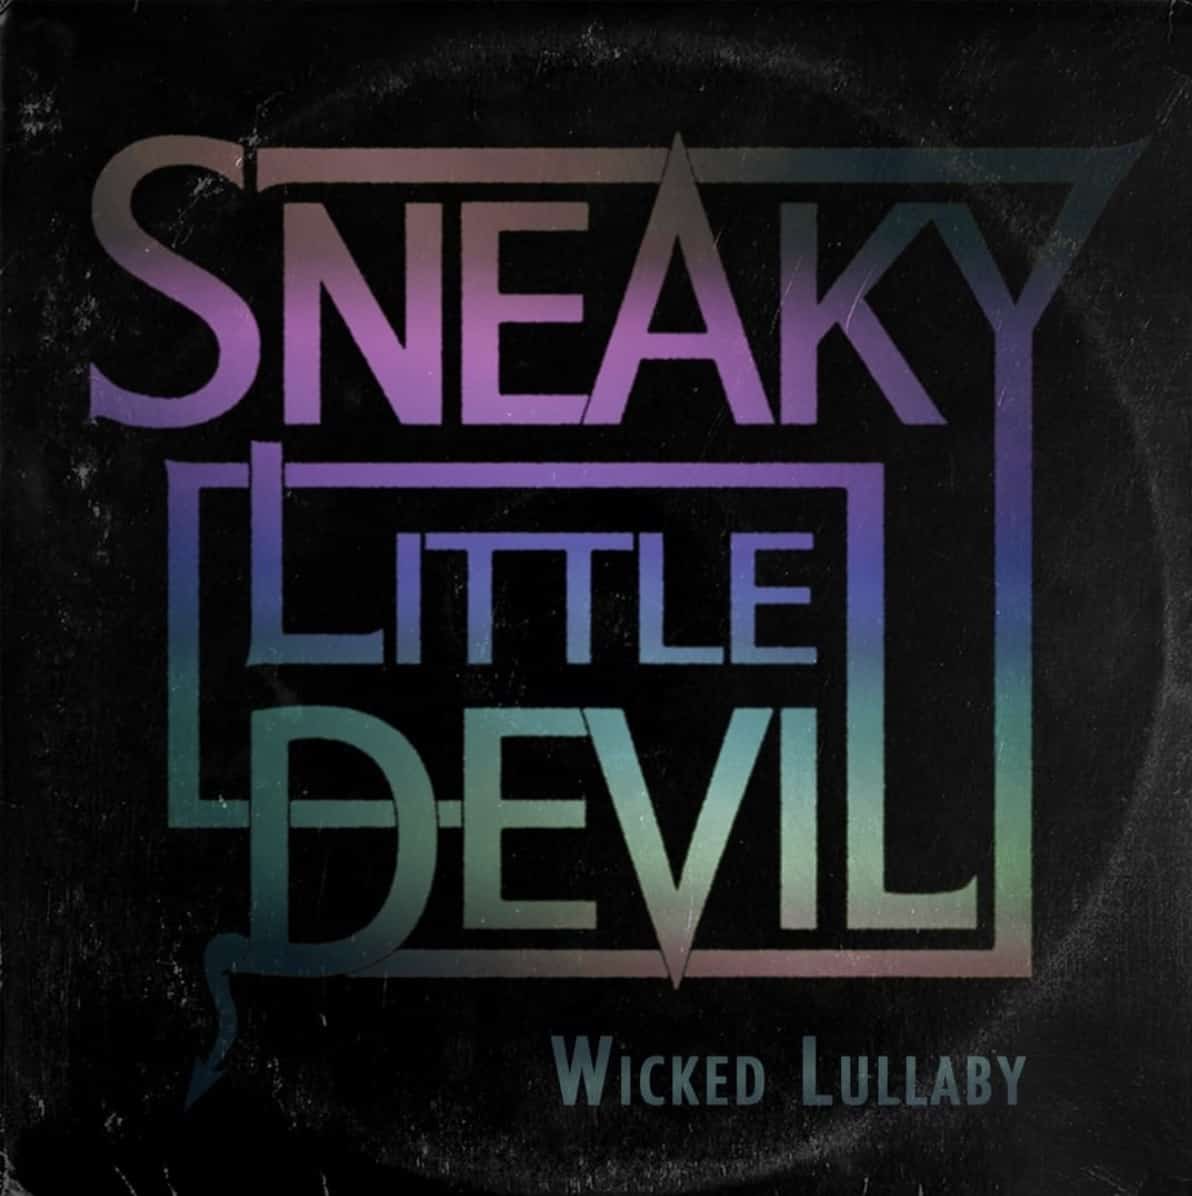 WICKED-LULLABY-Sneaky-Little-Devil